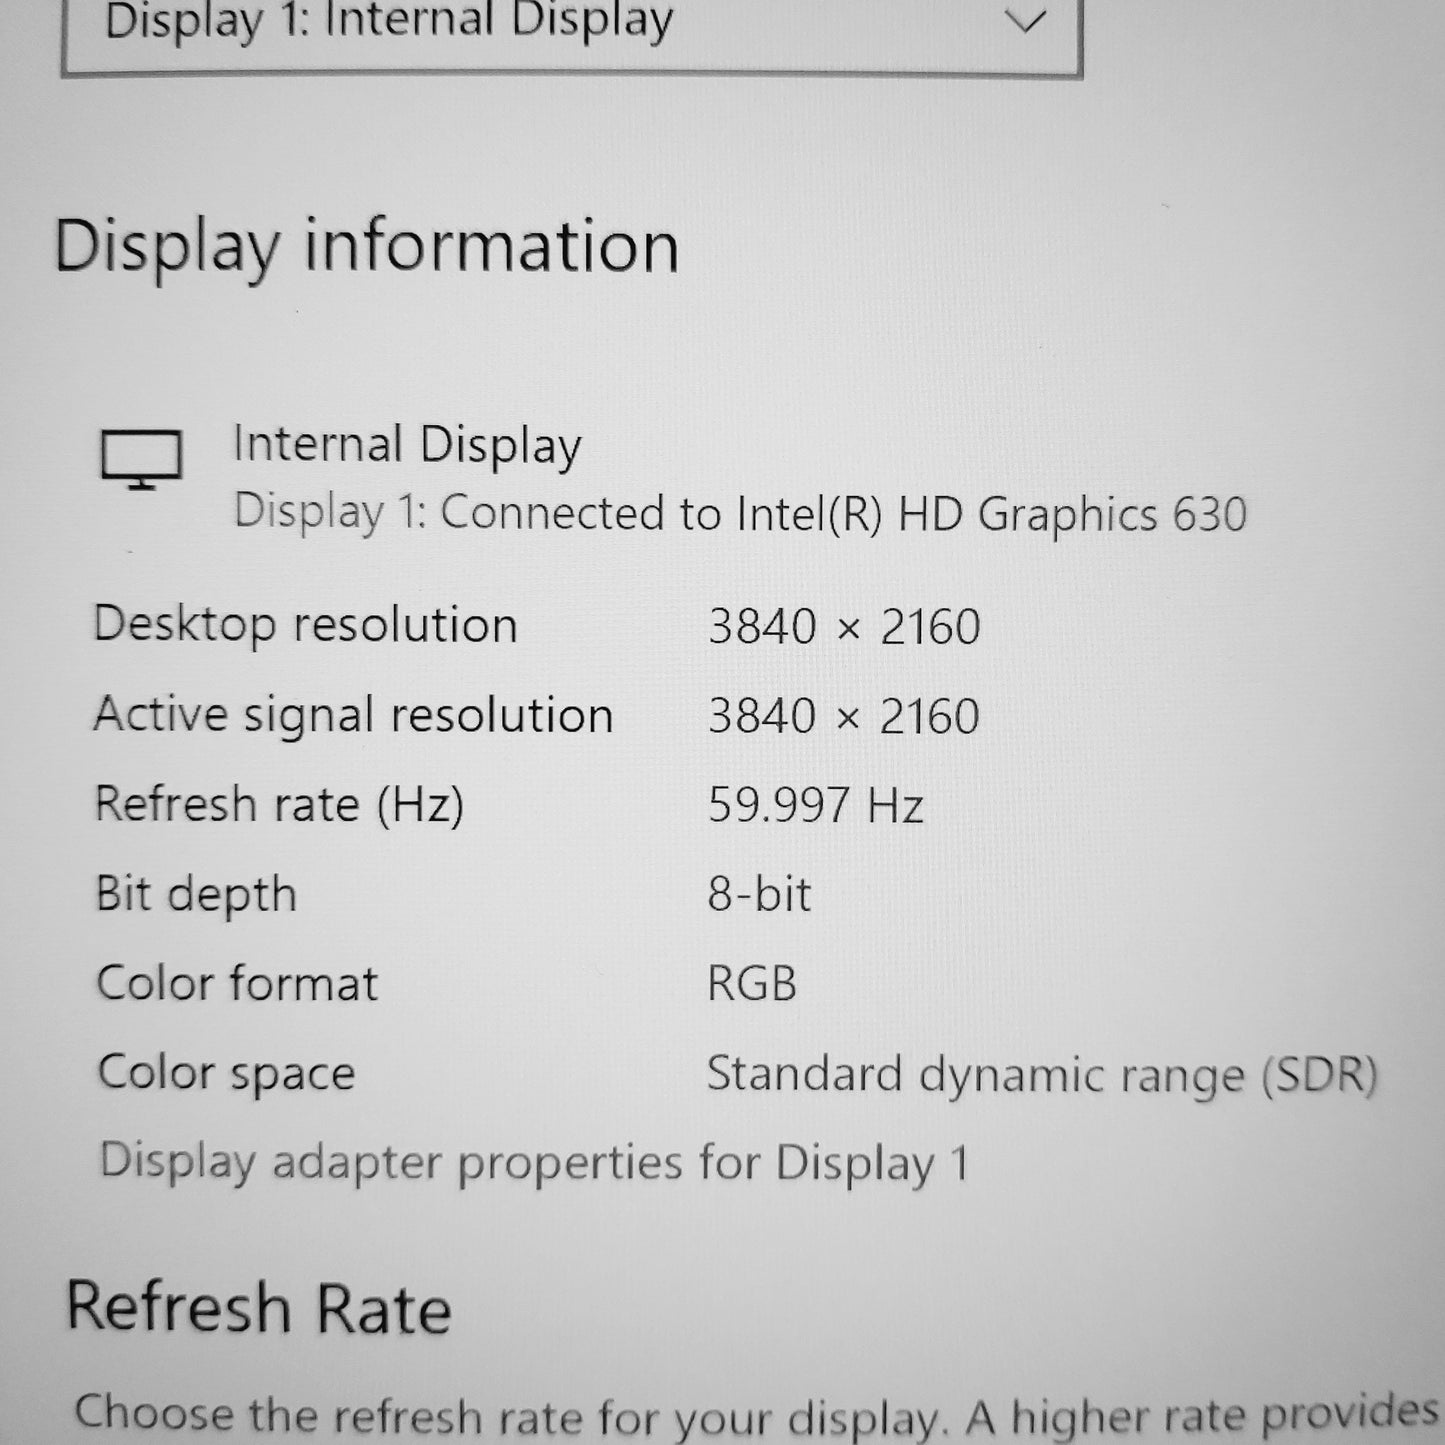 Dell Inspiron 15 7000 i7-7700hq Gtx 1050 Ti 4k Gaming Edition Laptop (Open Box)